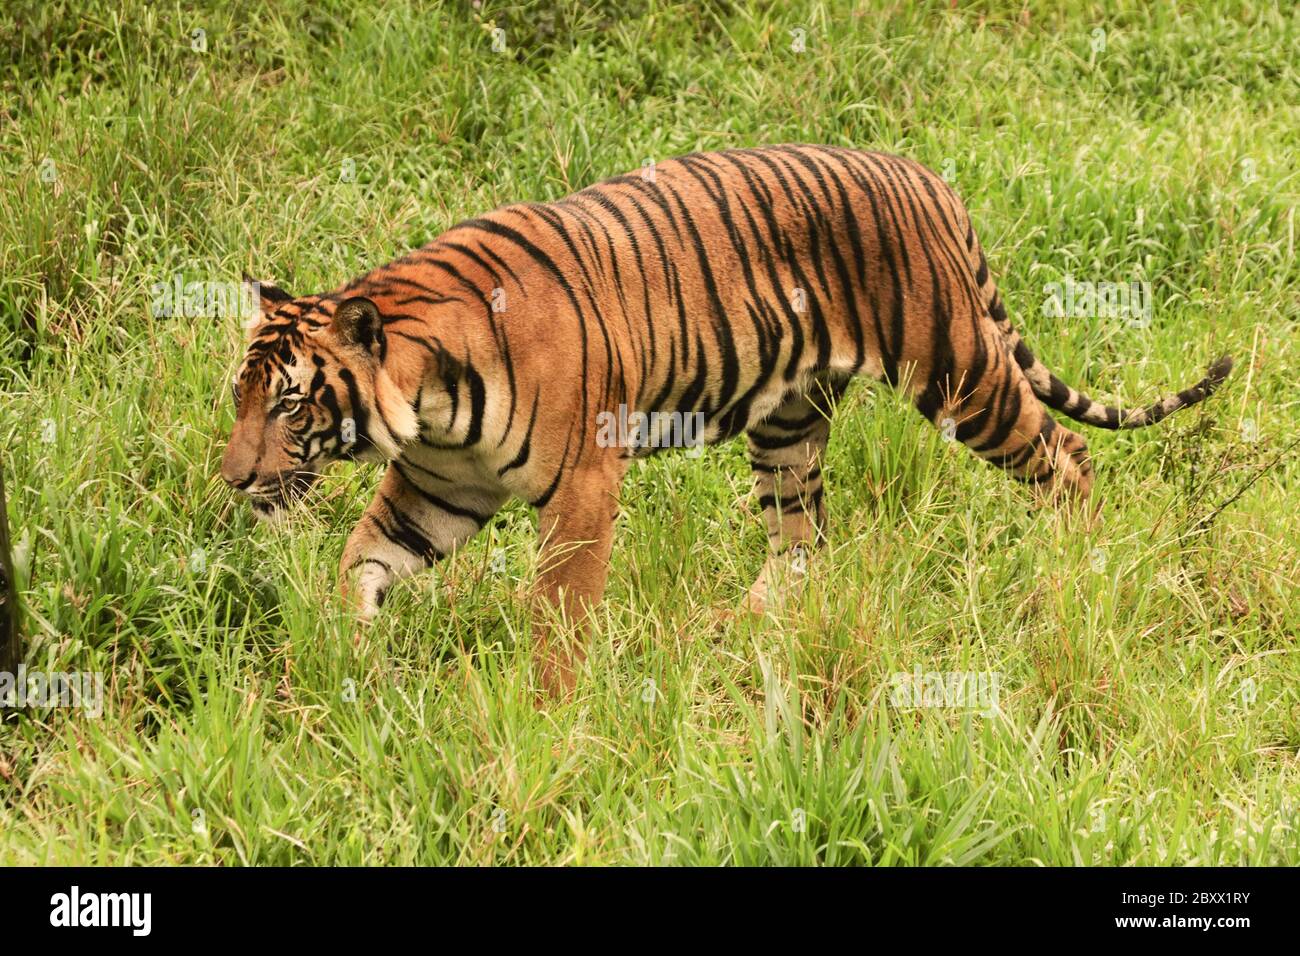 Malaysian Tiger, Borneo, Malaysia Stock Photo